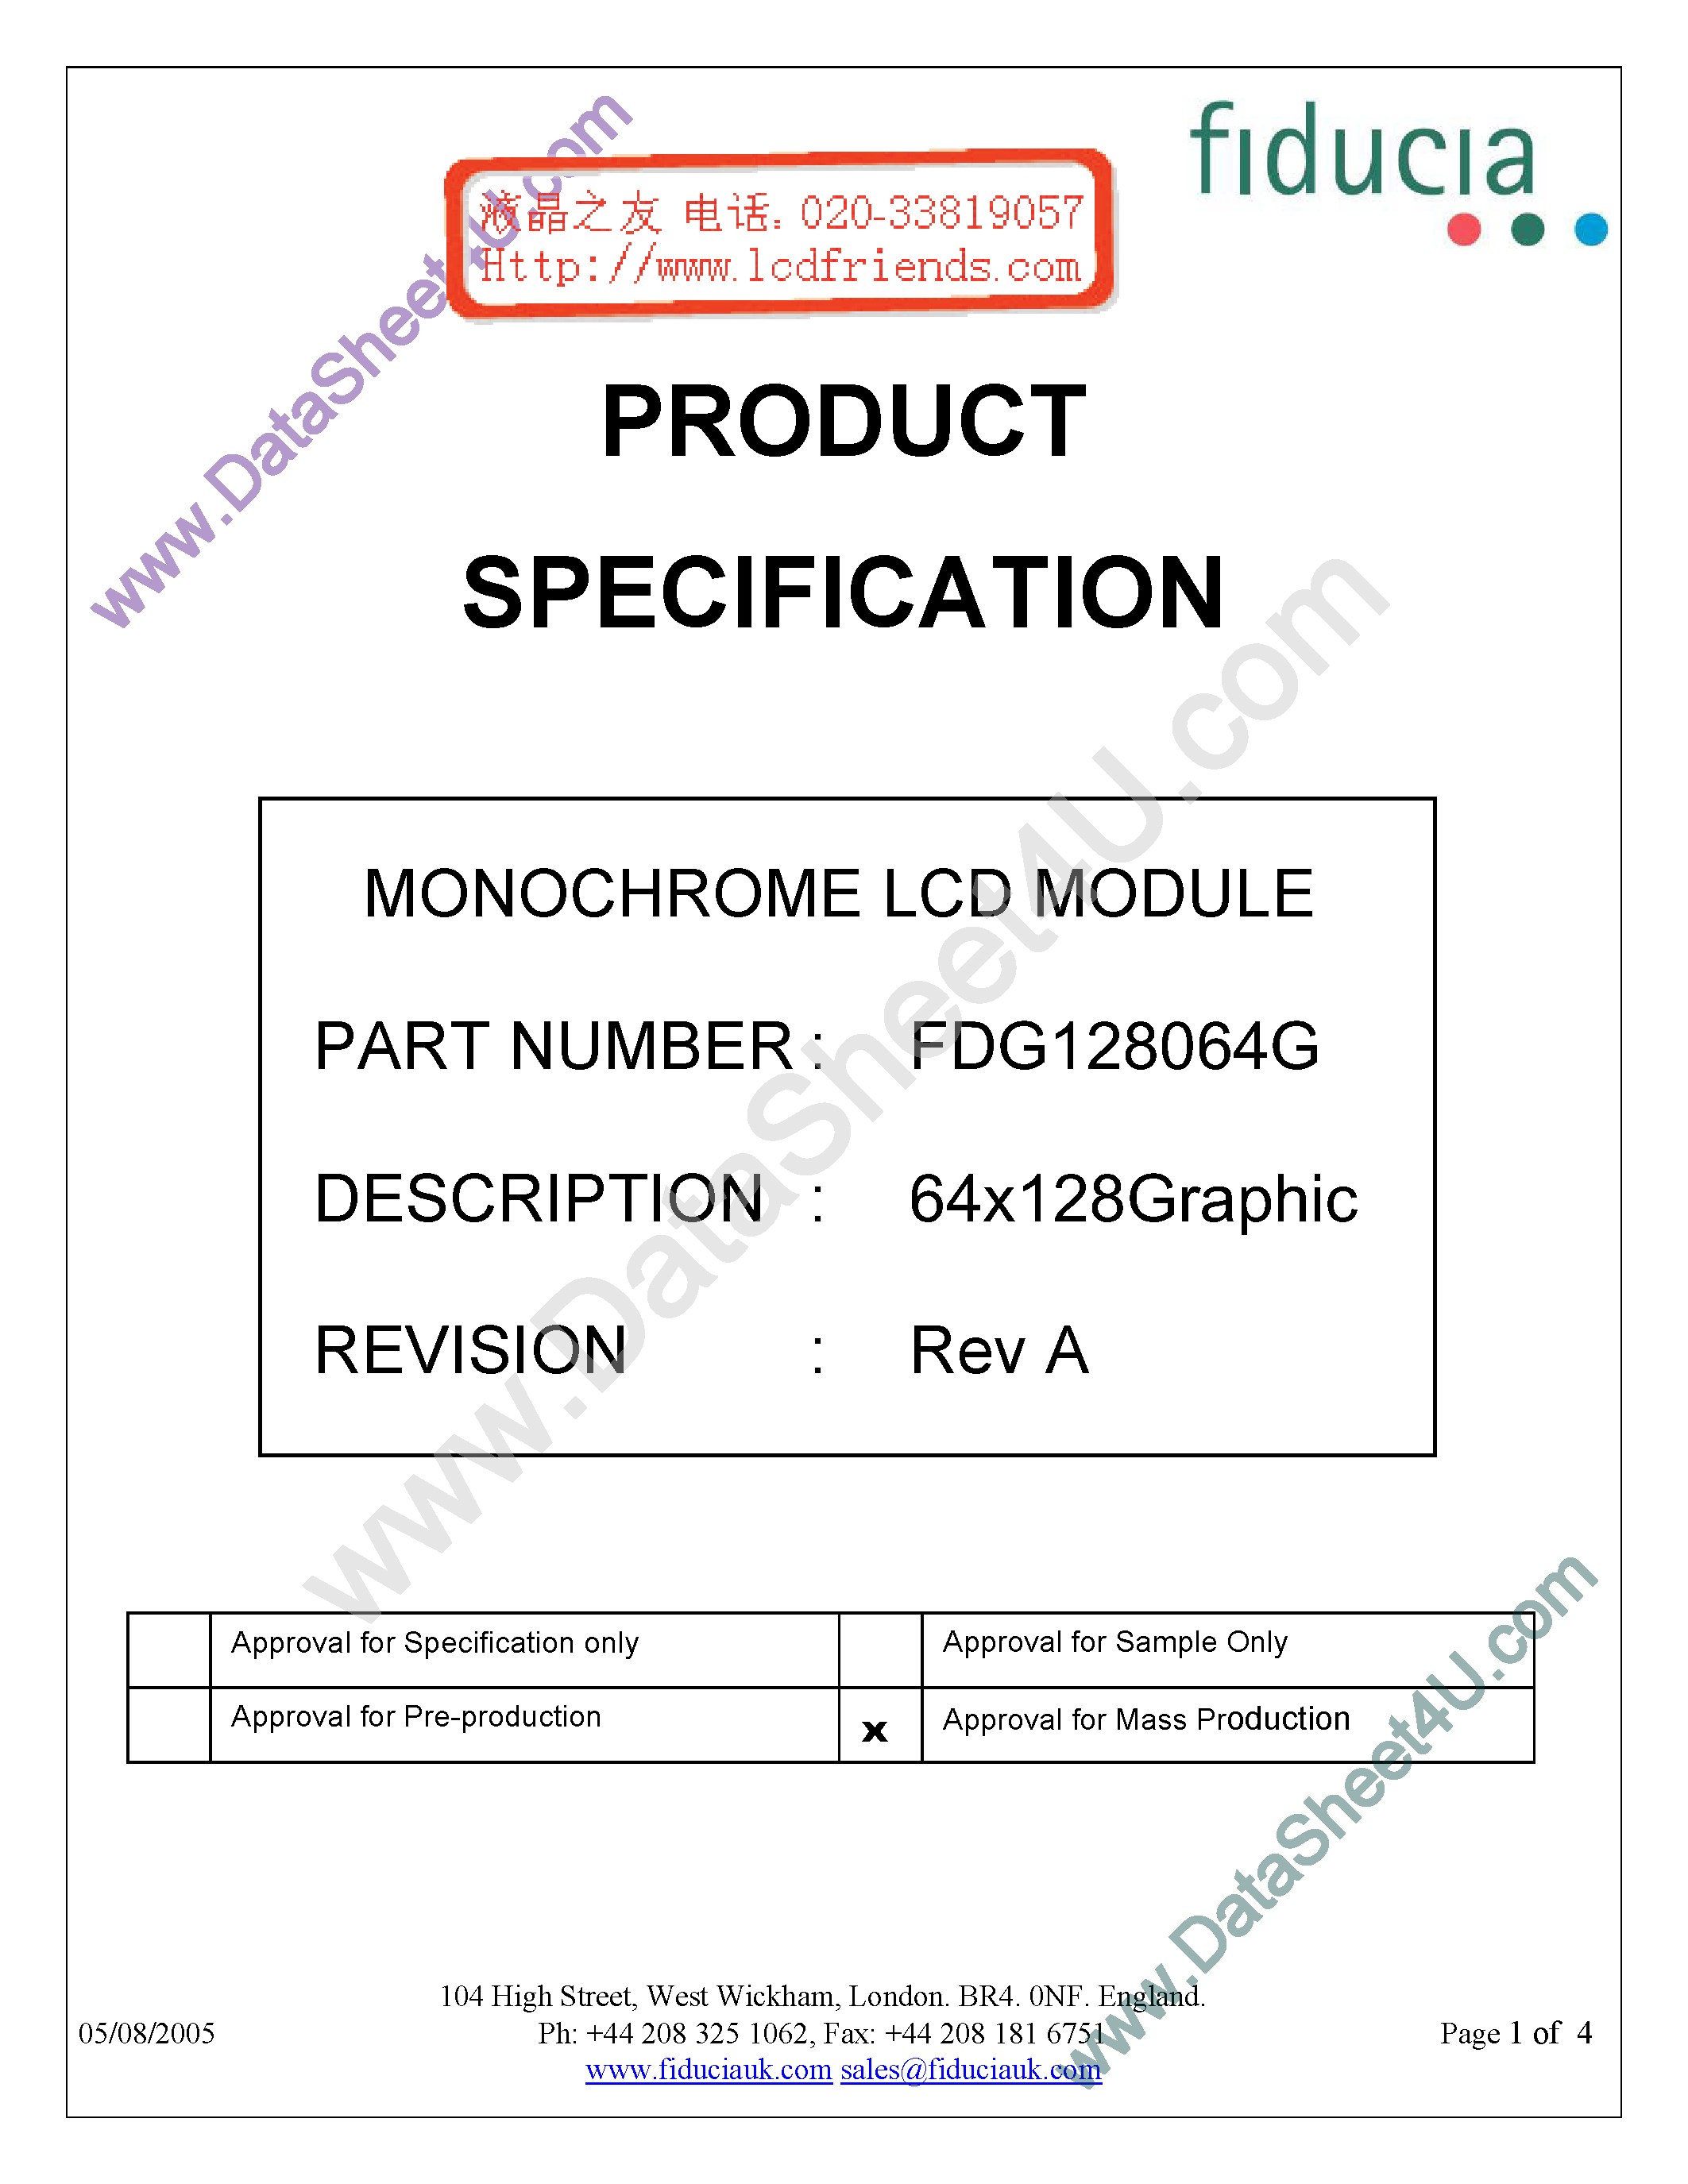 Даташит FDG128064G - Monochrome Lcd Module страница 1